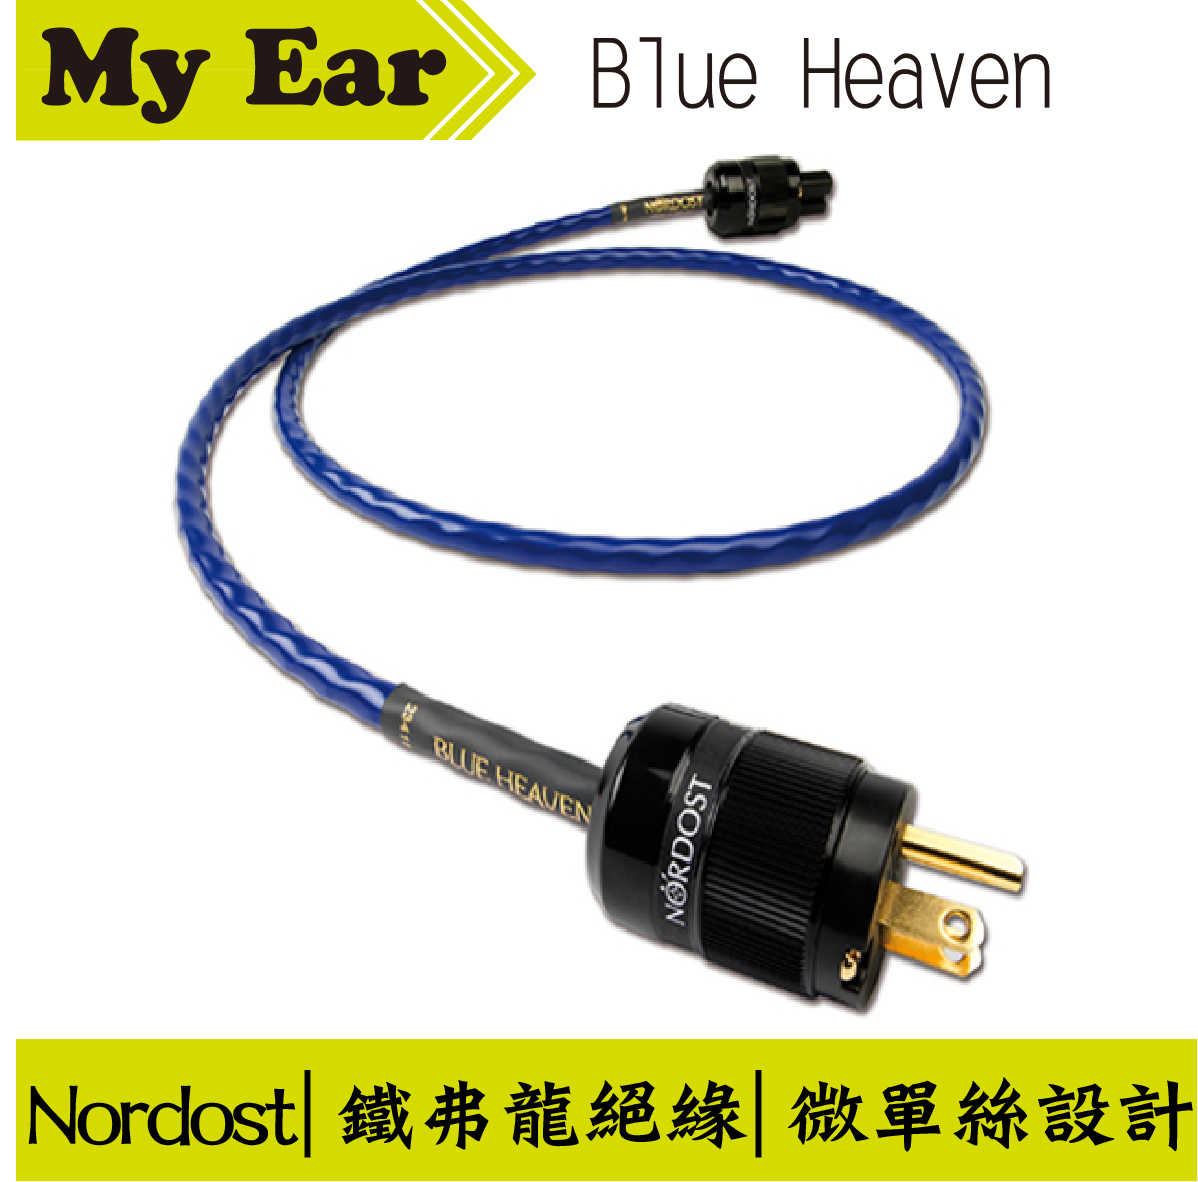 NORDOST Blue Heaven 電源線 1.5m | My Ear 耳機專門店